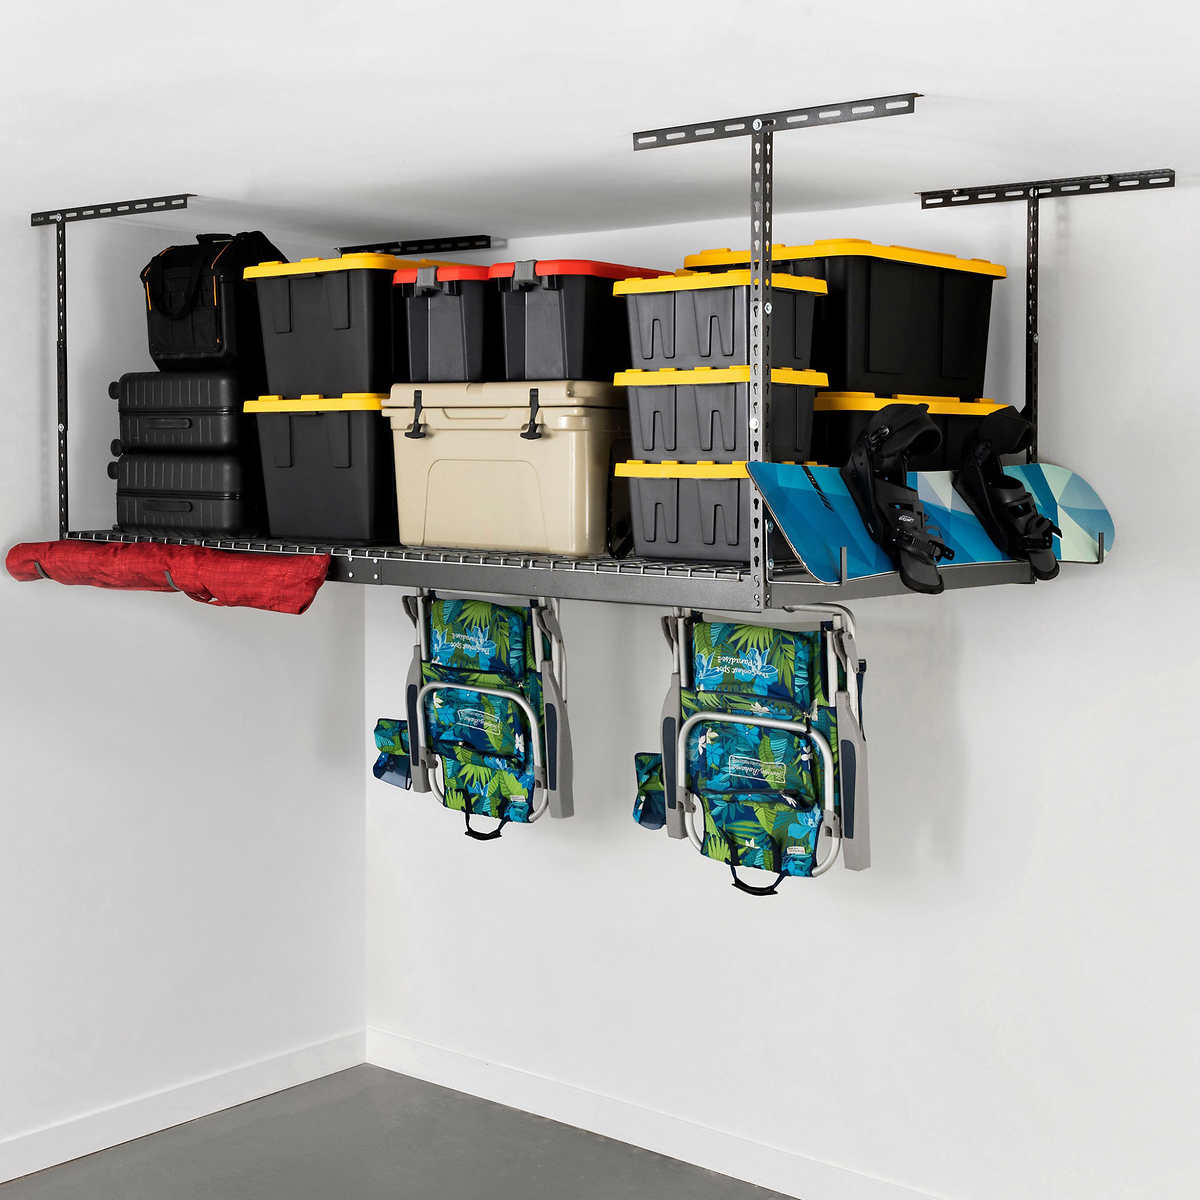 Saferacks 4 Ft X 8 Ft Overhead Garage Storage Rack And